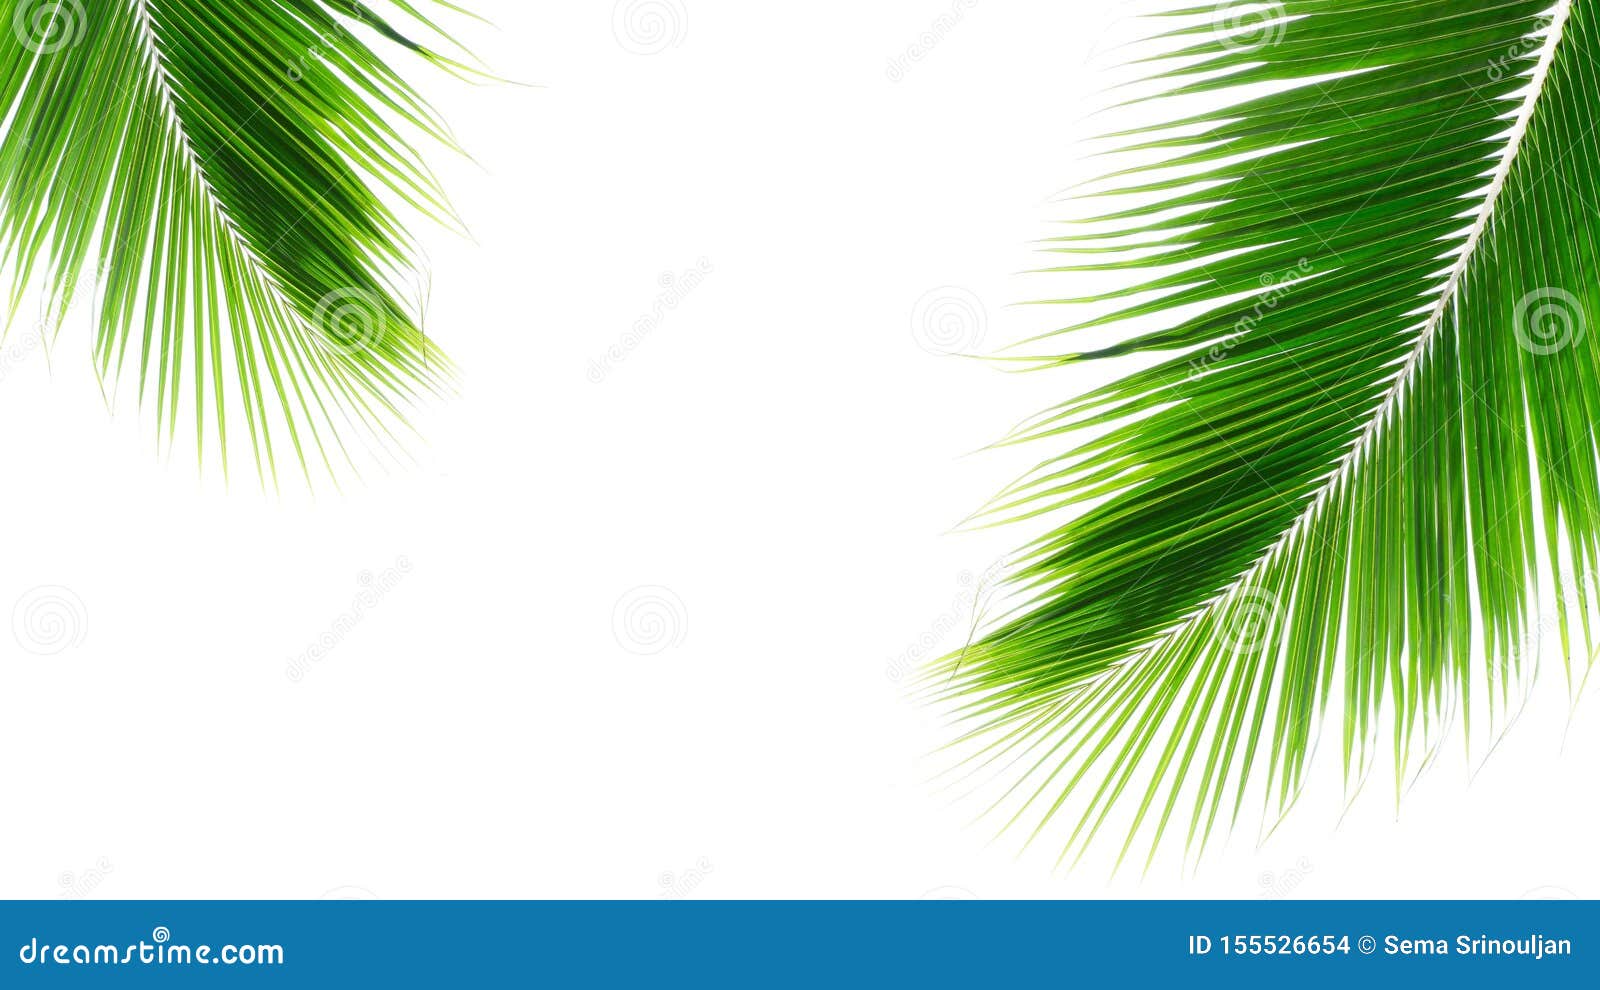 twins palms leaf  on white background.